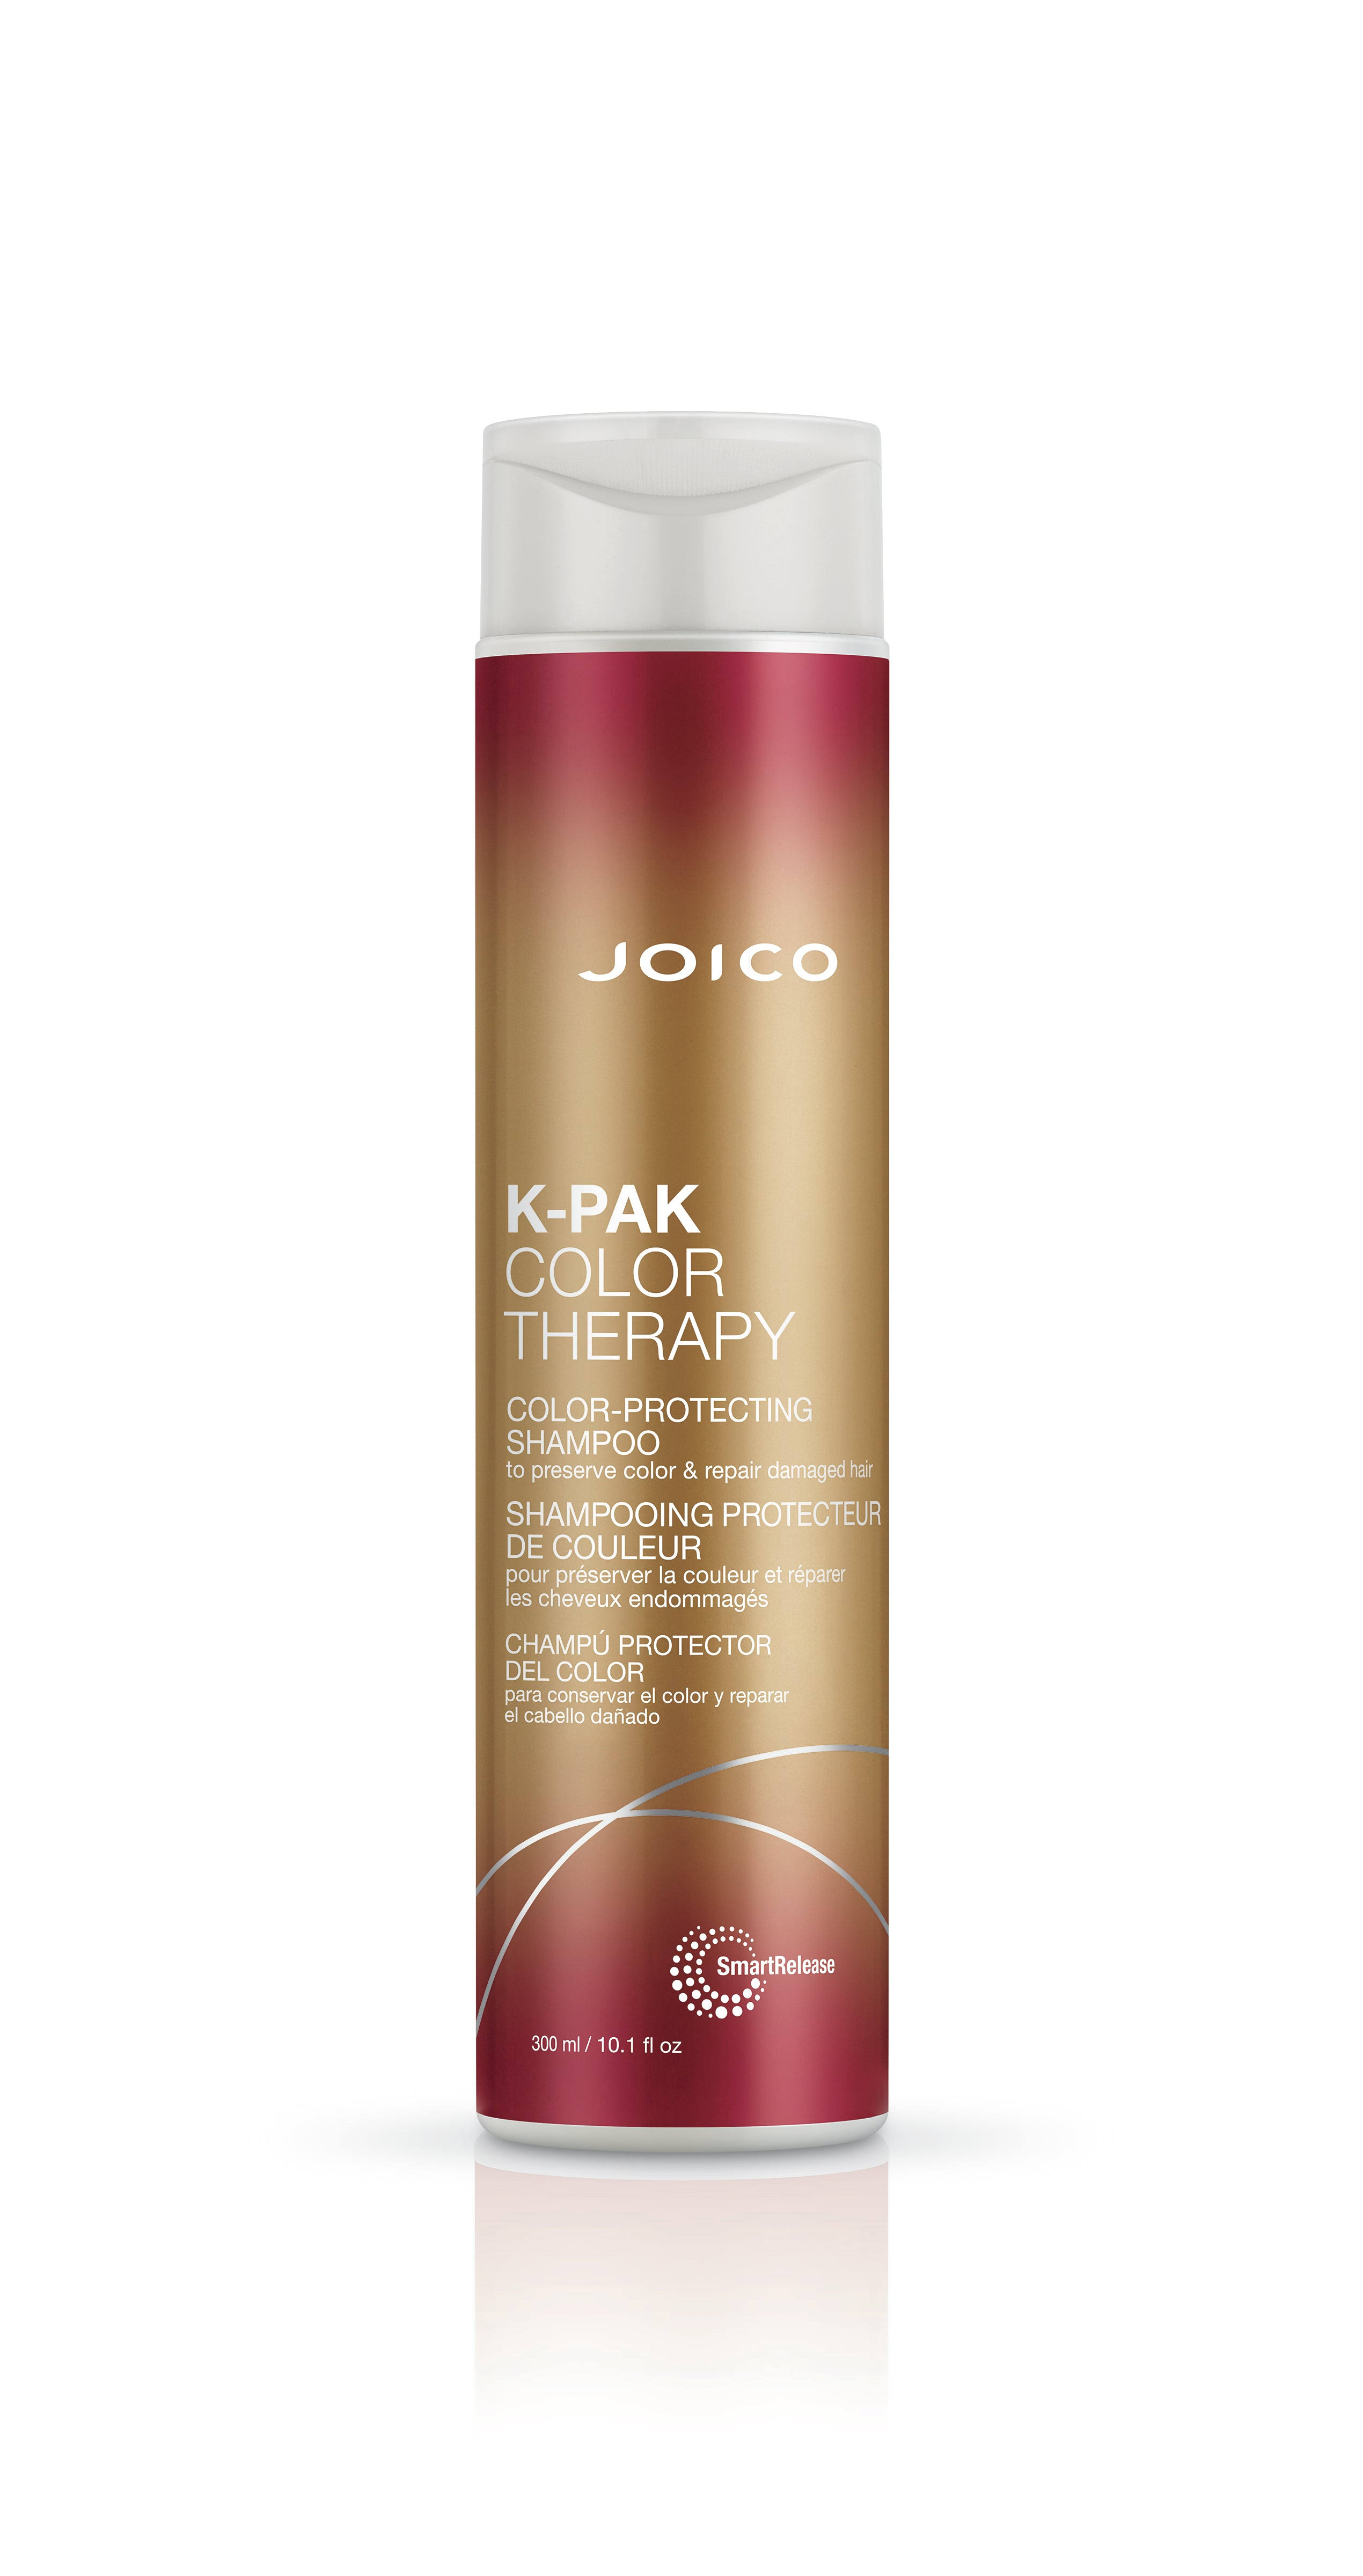 Joico k-pak color therapy shampoo 10.1 oz